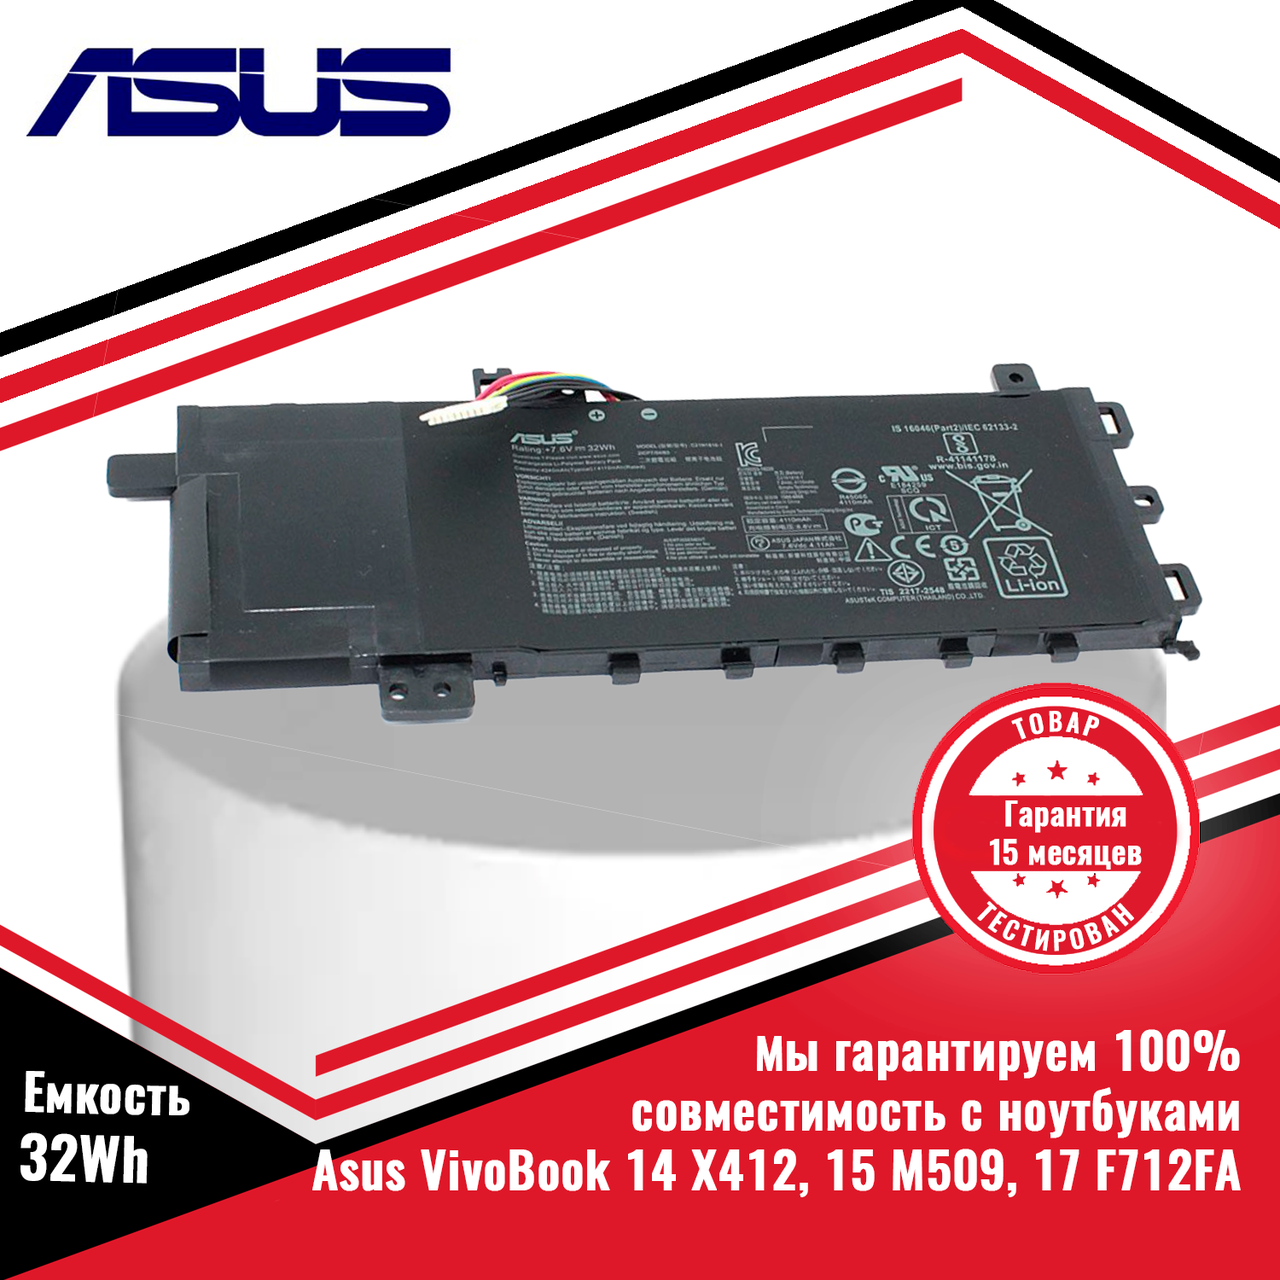 Оригинальный аккумулятор (батарея) для ноутбука Asus VivoBook 14 X412, 15 M509, 17 F71 (B21N1818-1) 7.6V 32Wh